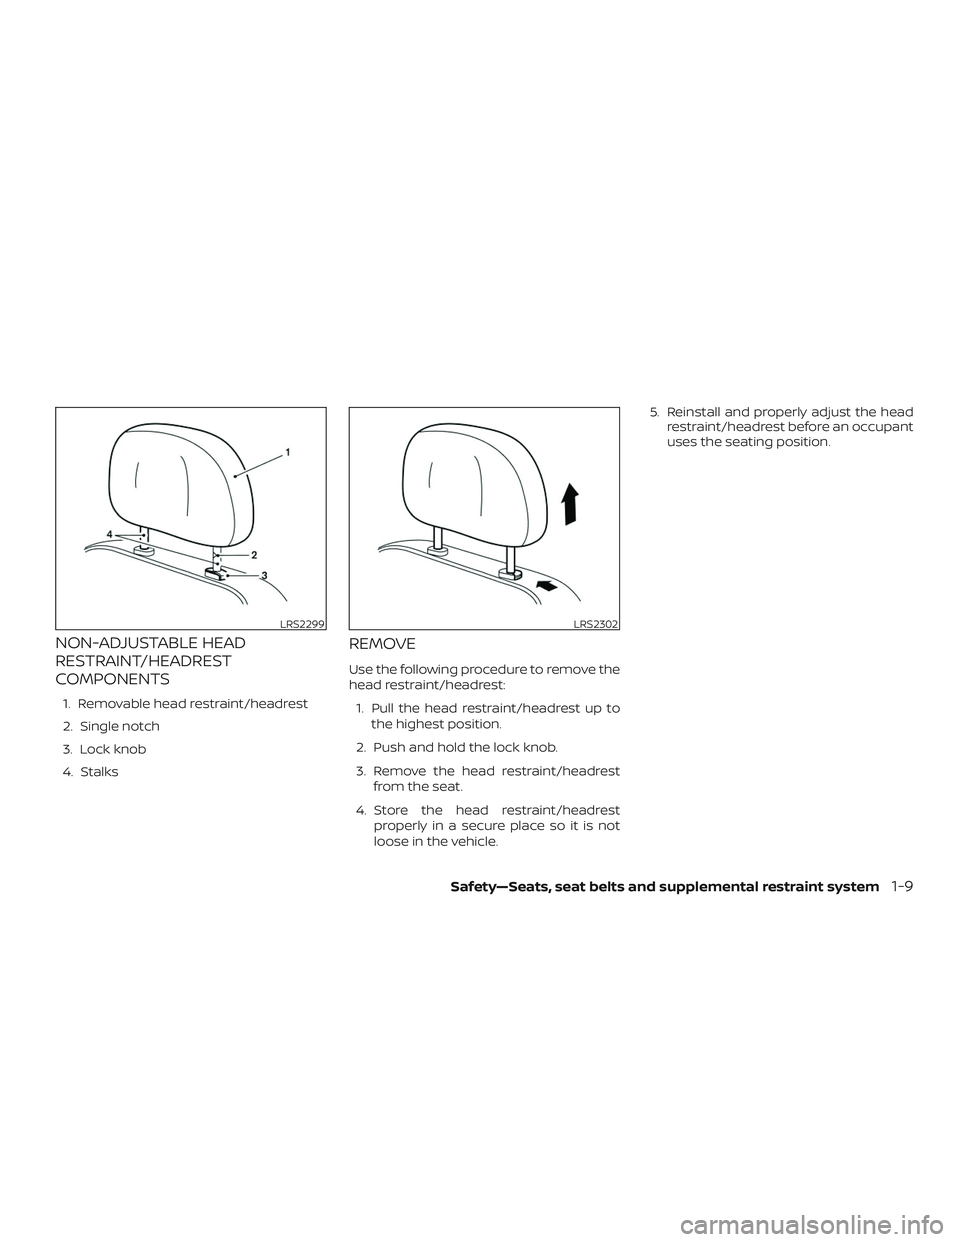 NISSAN SENTRA 2019  Owner´s Manual NON-ADJUSTABLE HEAD
RESTRAINT/HEADREST
COMPONENTS
1. Removable head restraint/headrest
2. Single notch
3. Lock knob
4. Stalks
REMOVE
Use the following procedure to remove the
head restraint/headrest:1